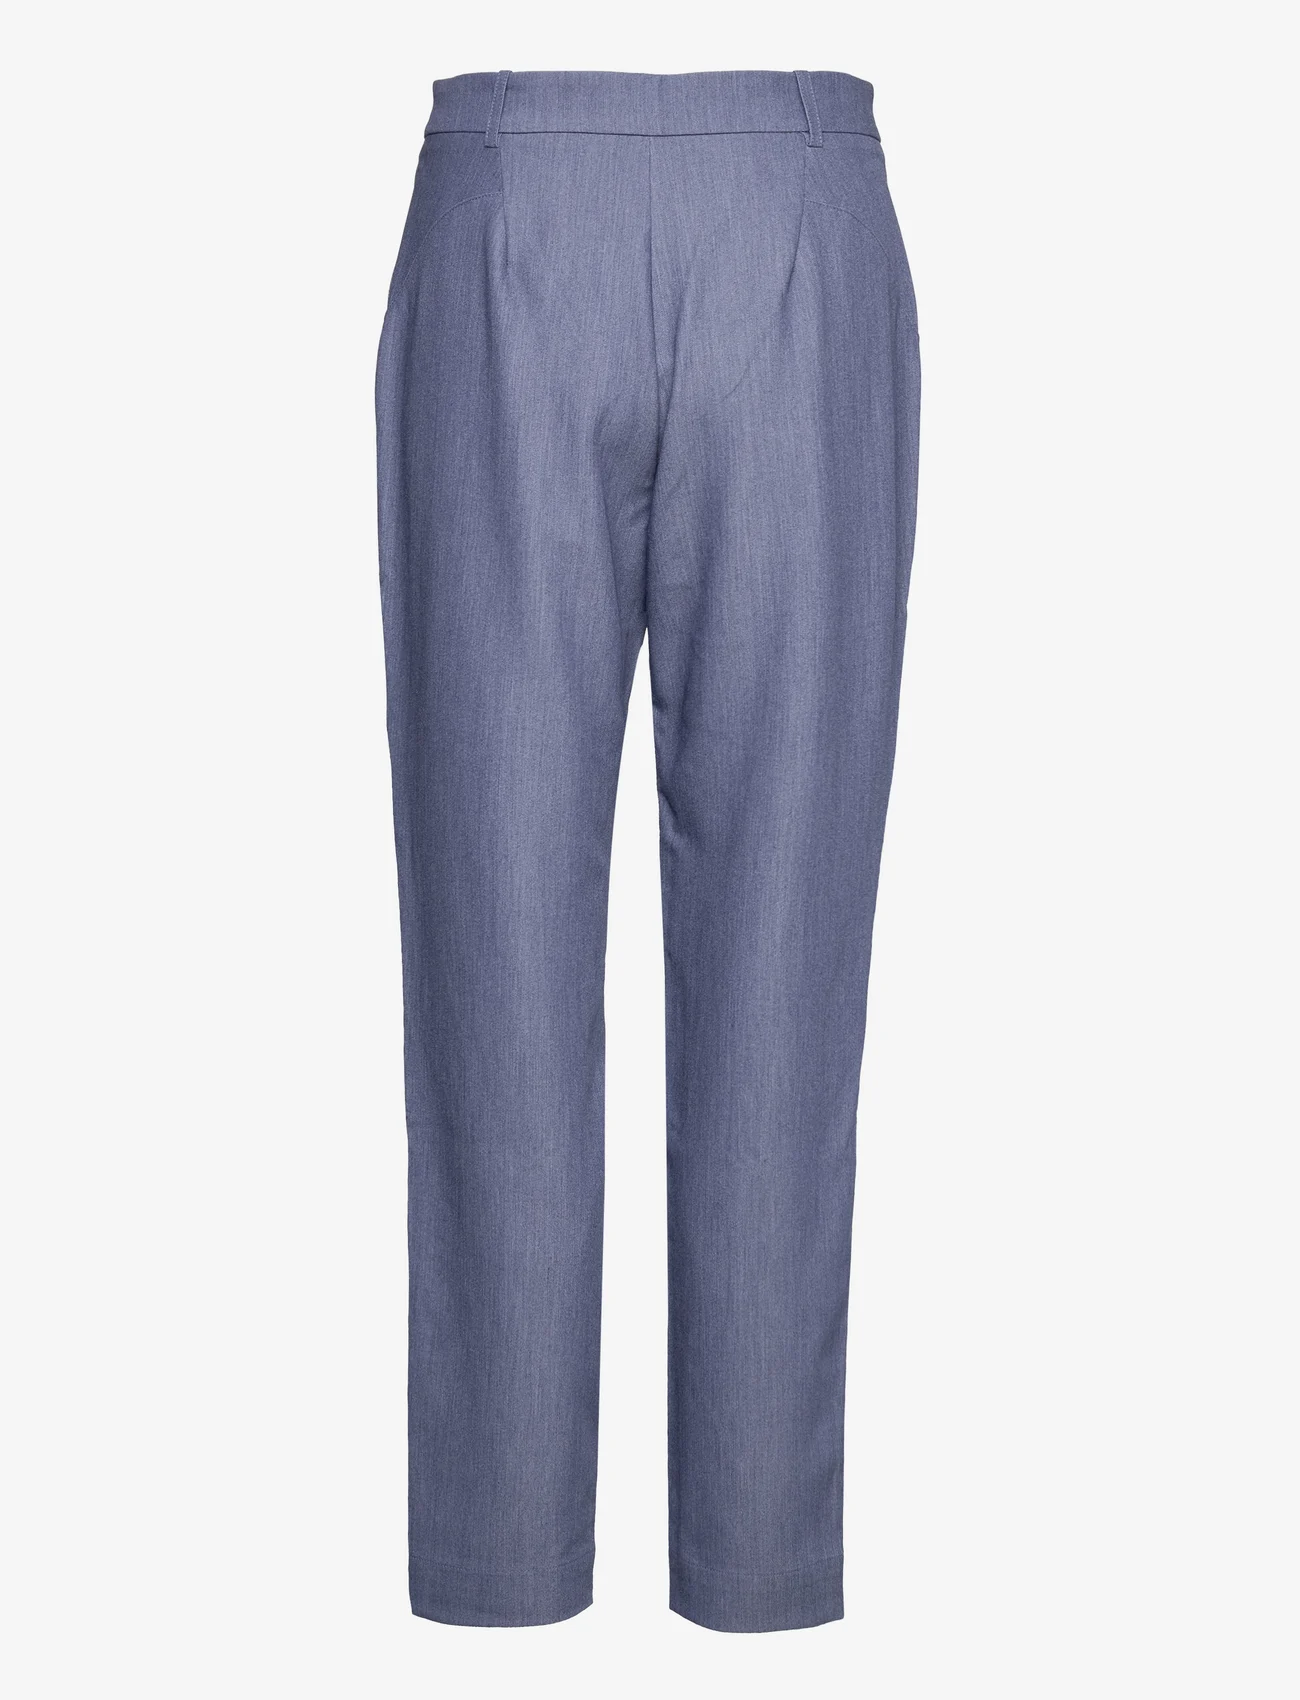 Coster Copenhagen - Pants with regular legs - Stella fi - bukser med lige ben - medium denim blue - 1